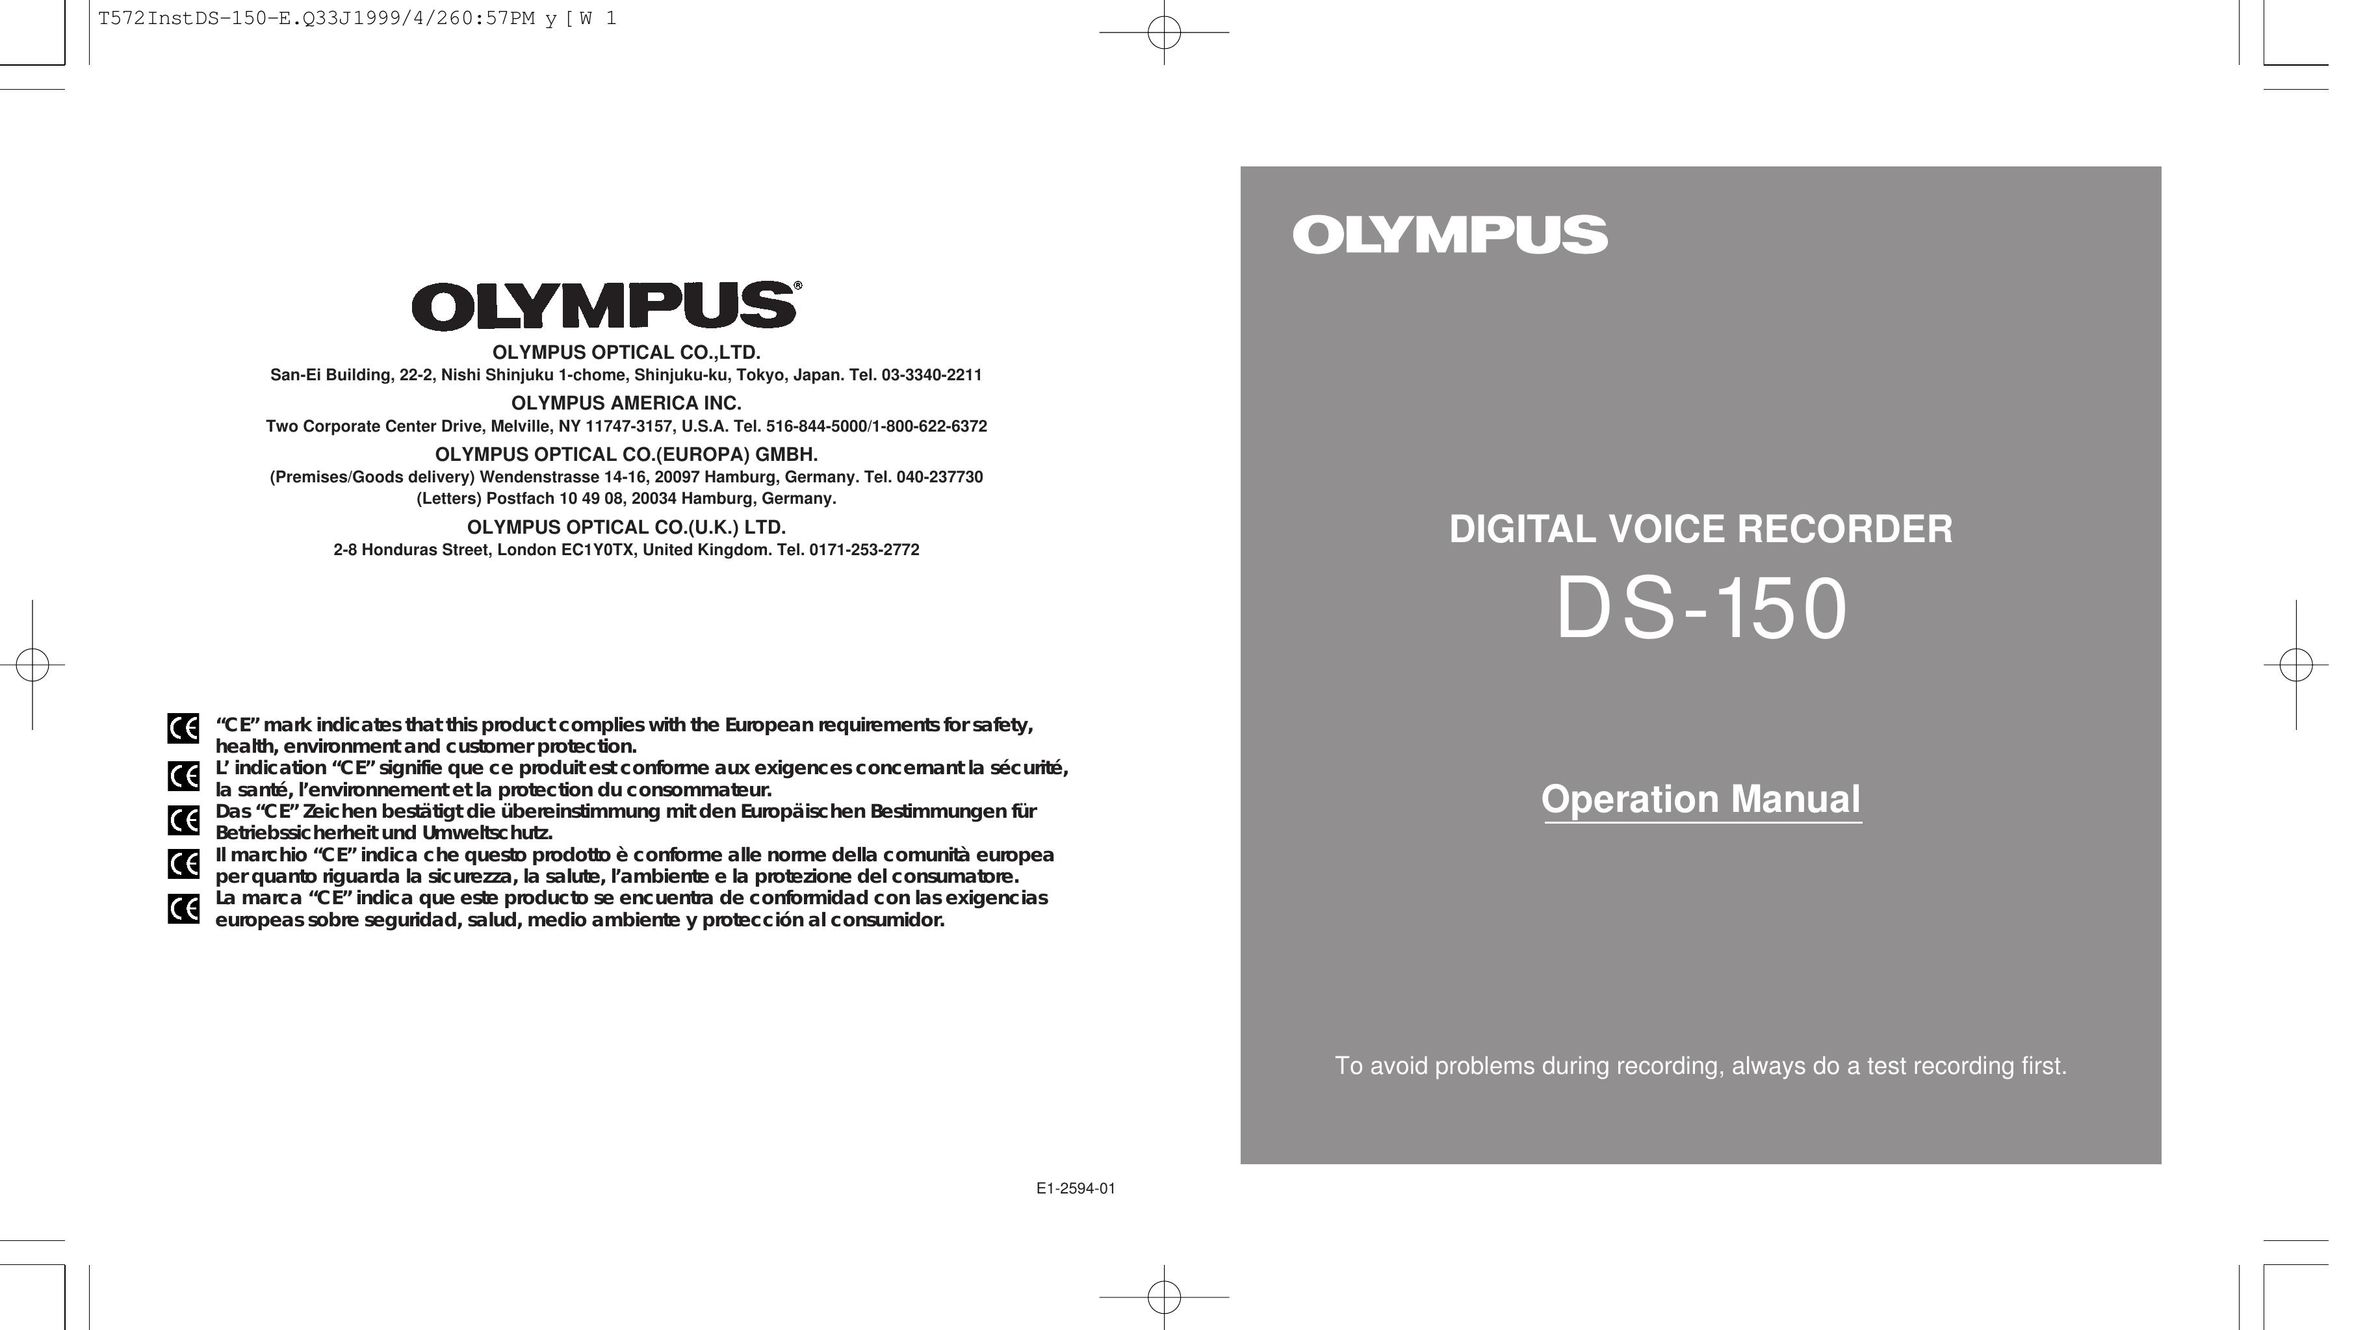 Olympus DS-150 DVR User Manual